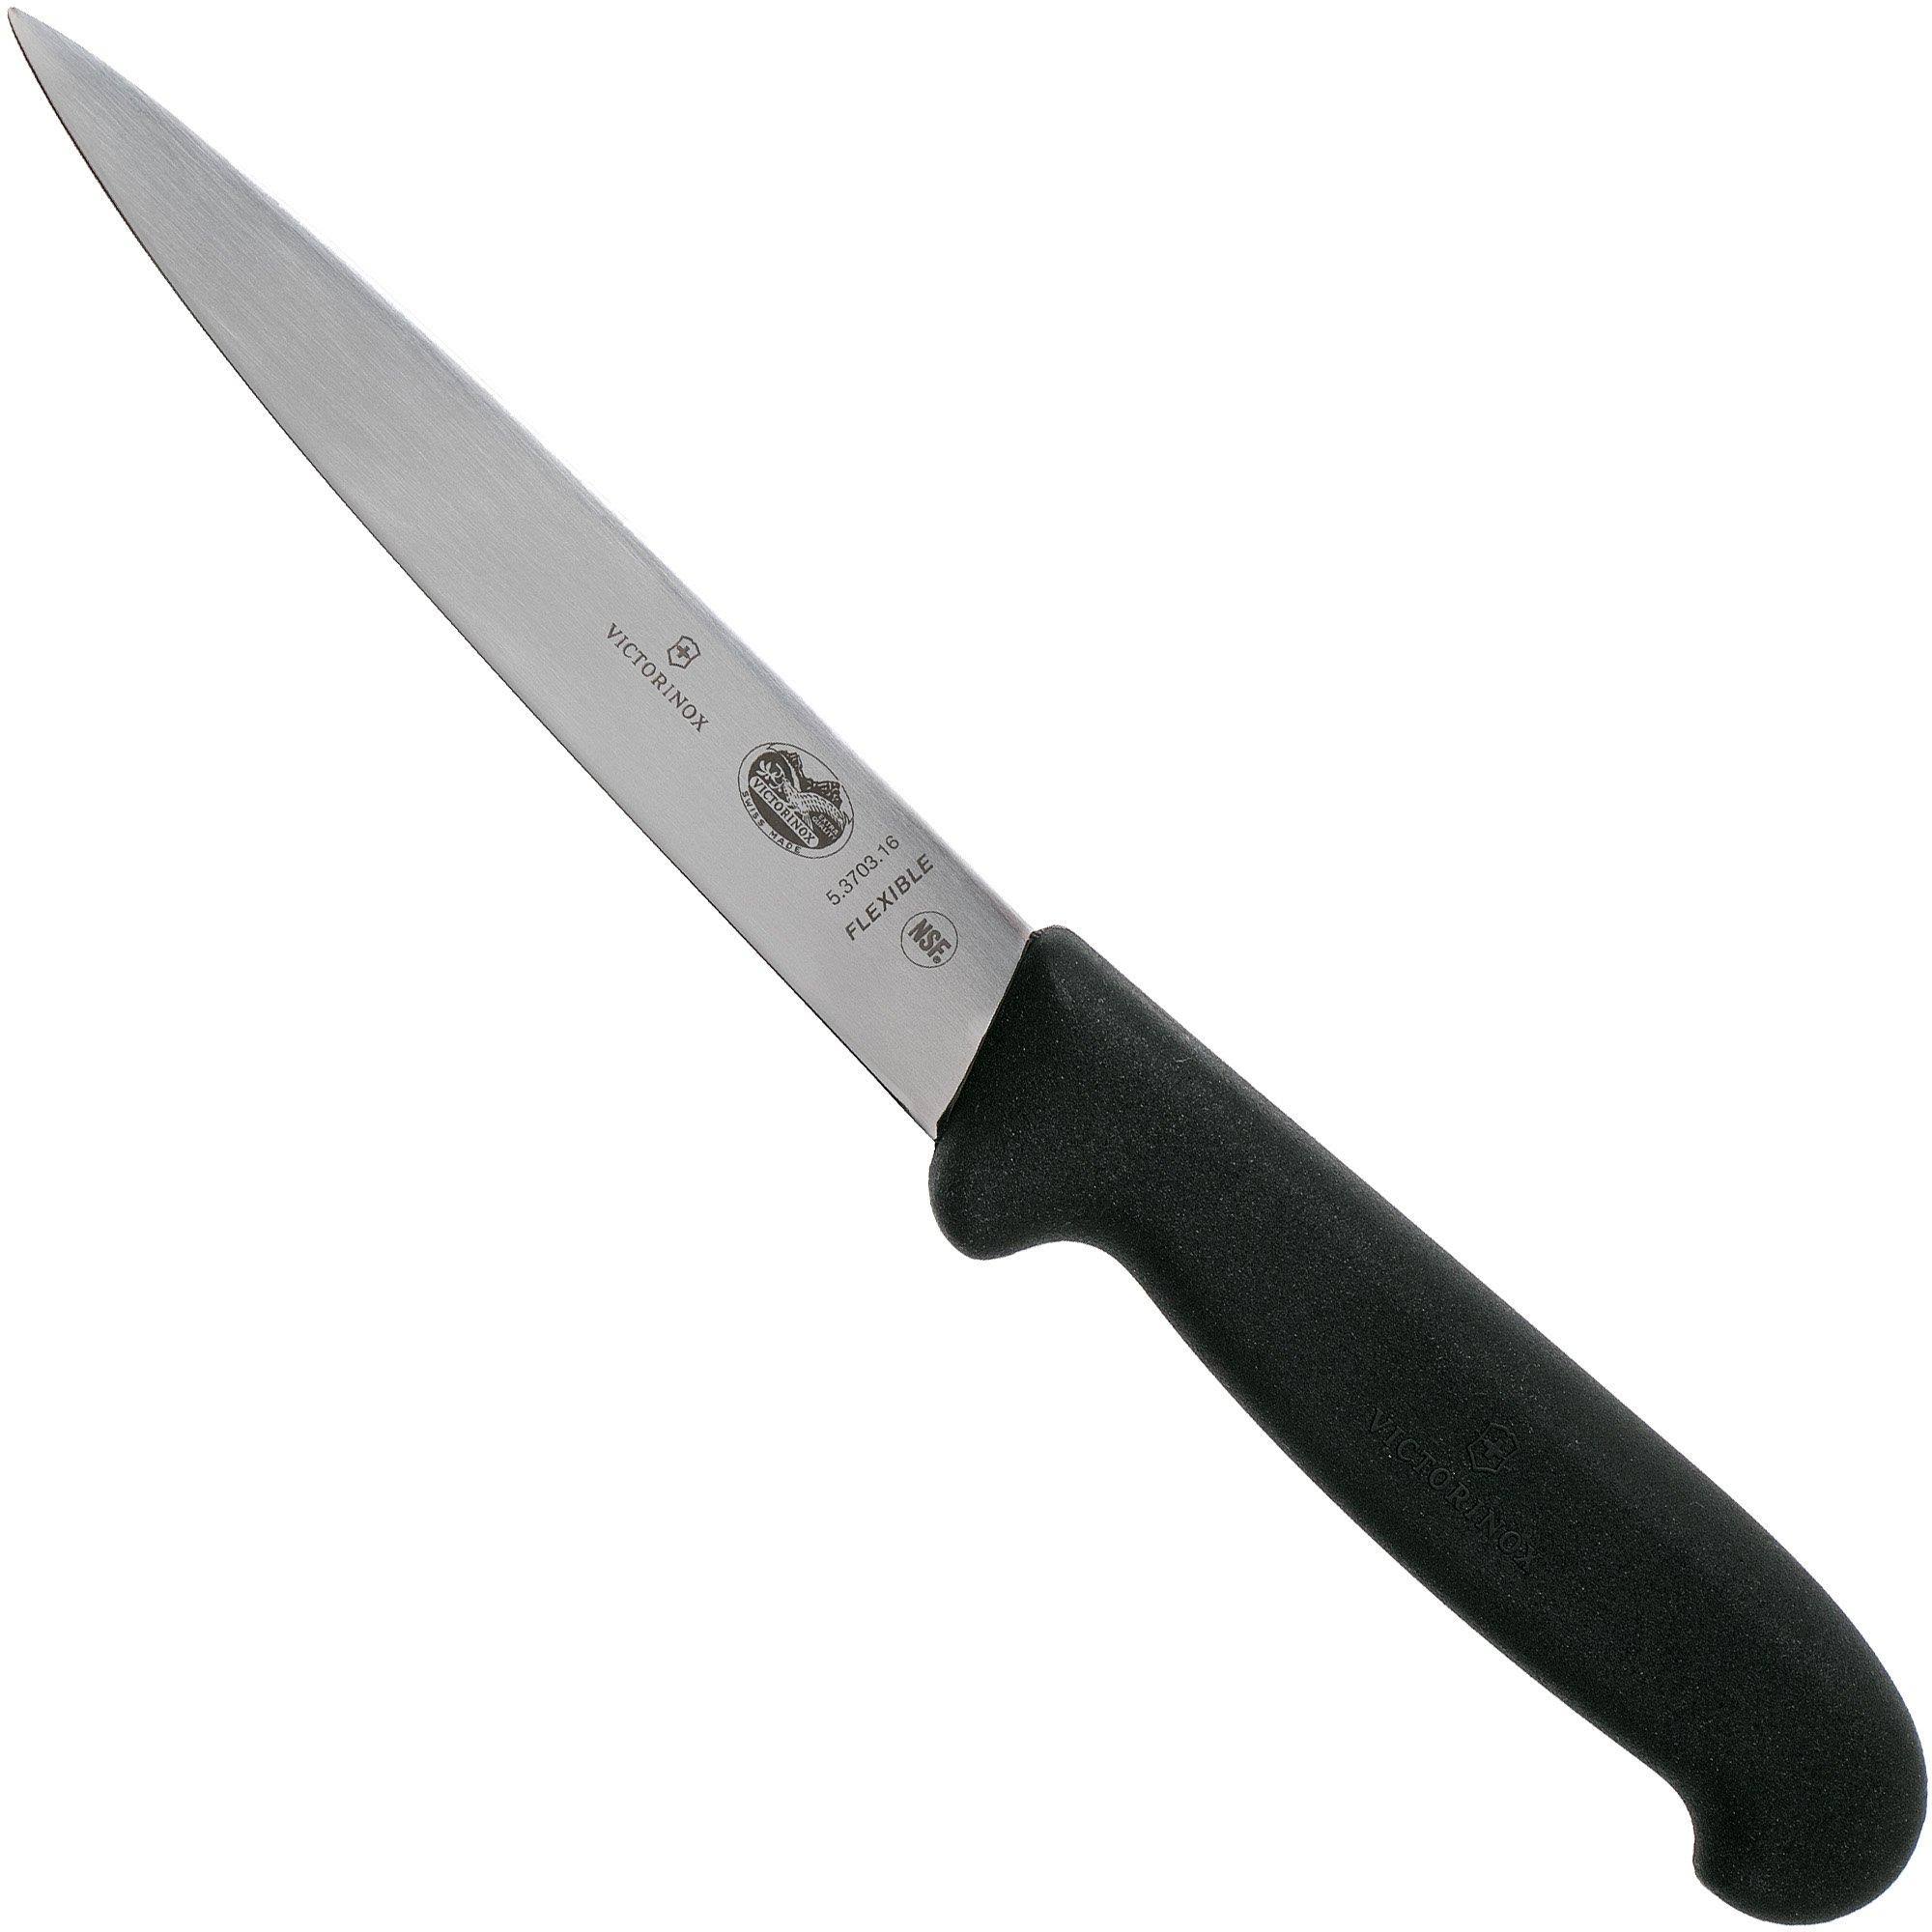 Victorinox Filleting Knife - 6"